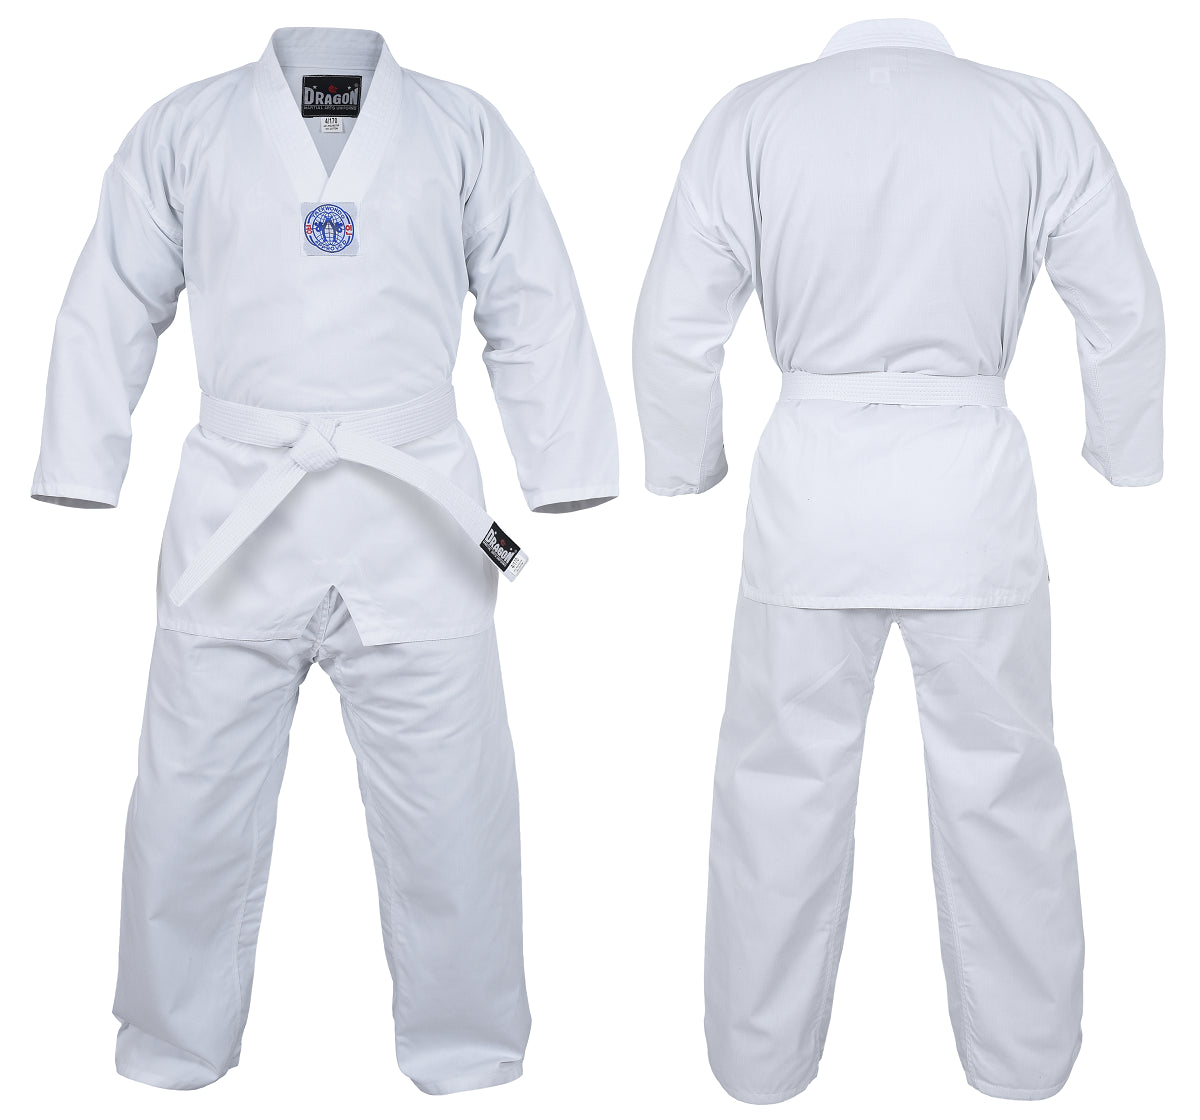 Dragon Deluxe Taekwondo Uniform | White [8oz] - Fitness Hero Brand new